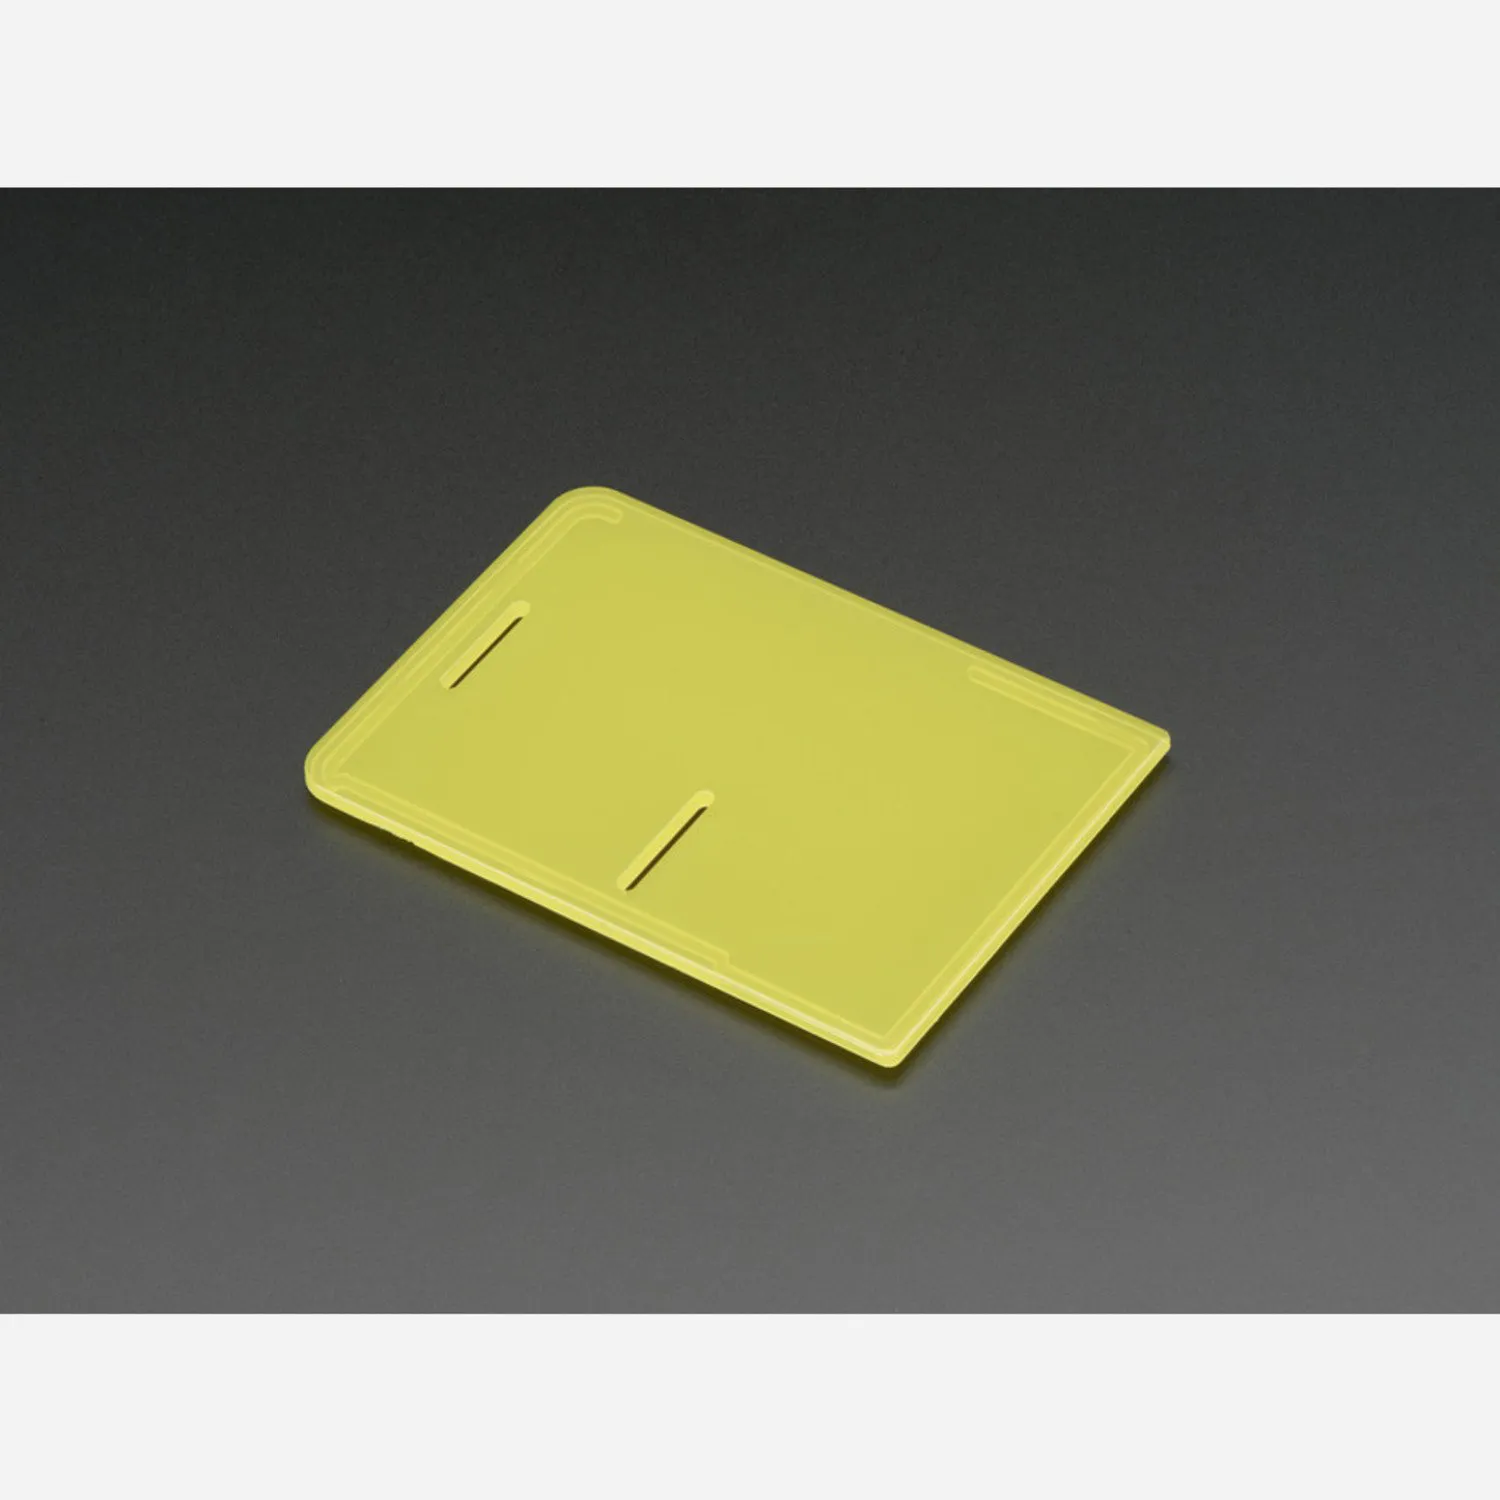 Photo of Raspberry Pi Model B+ / Pi 2 / Pi 3 Case Lid - Yellow